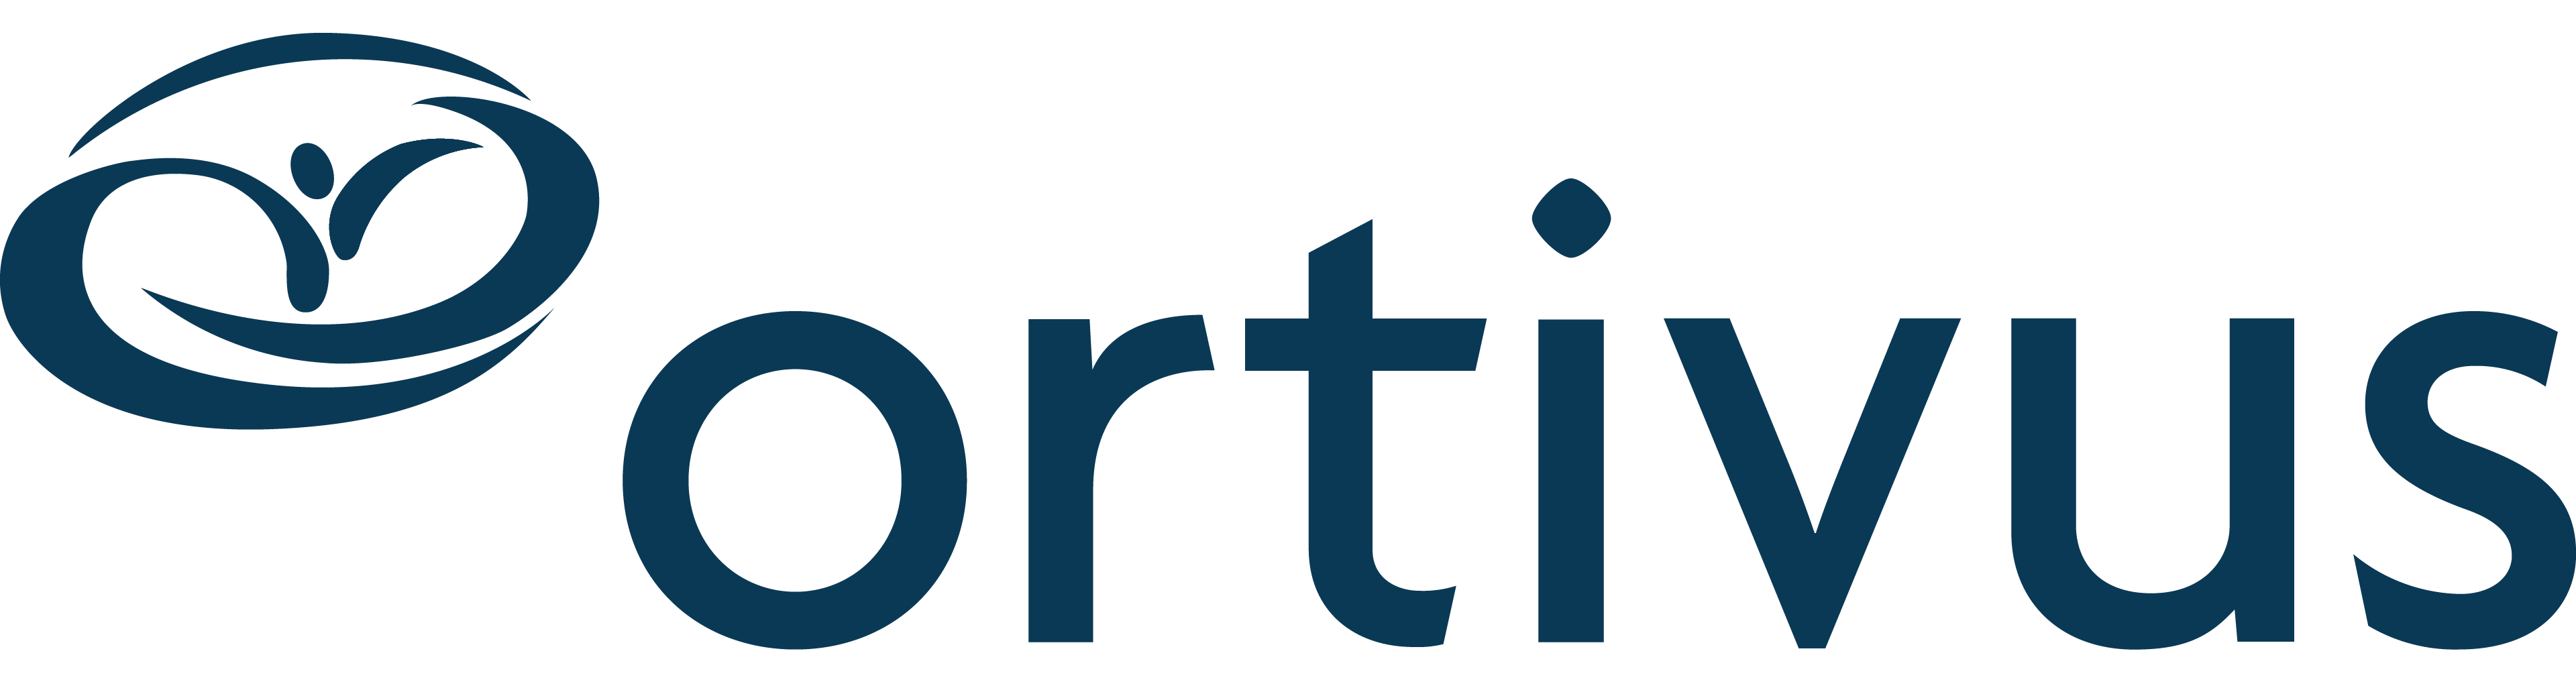 Ortivus logo blue